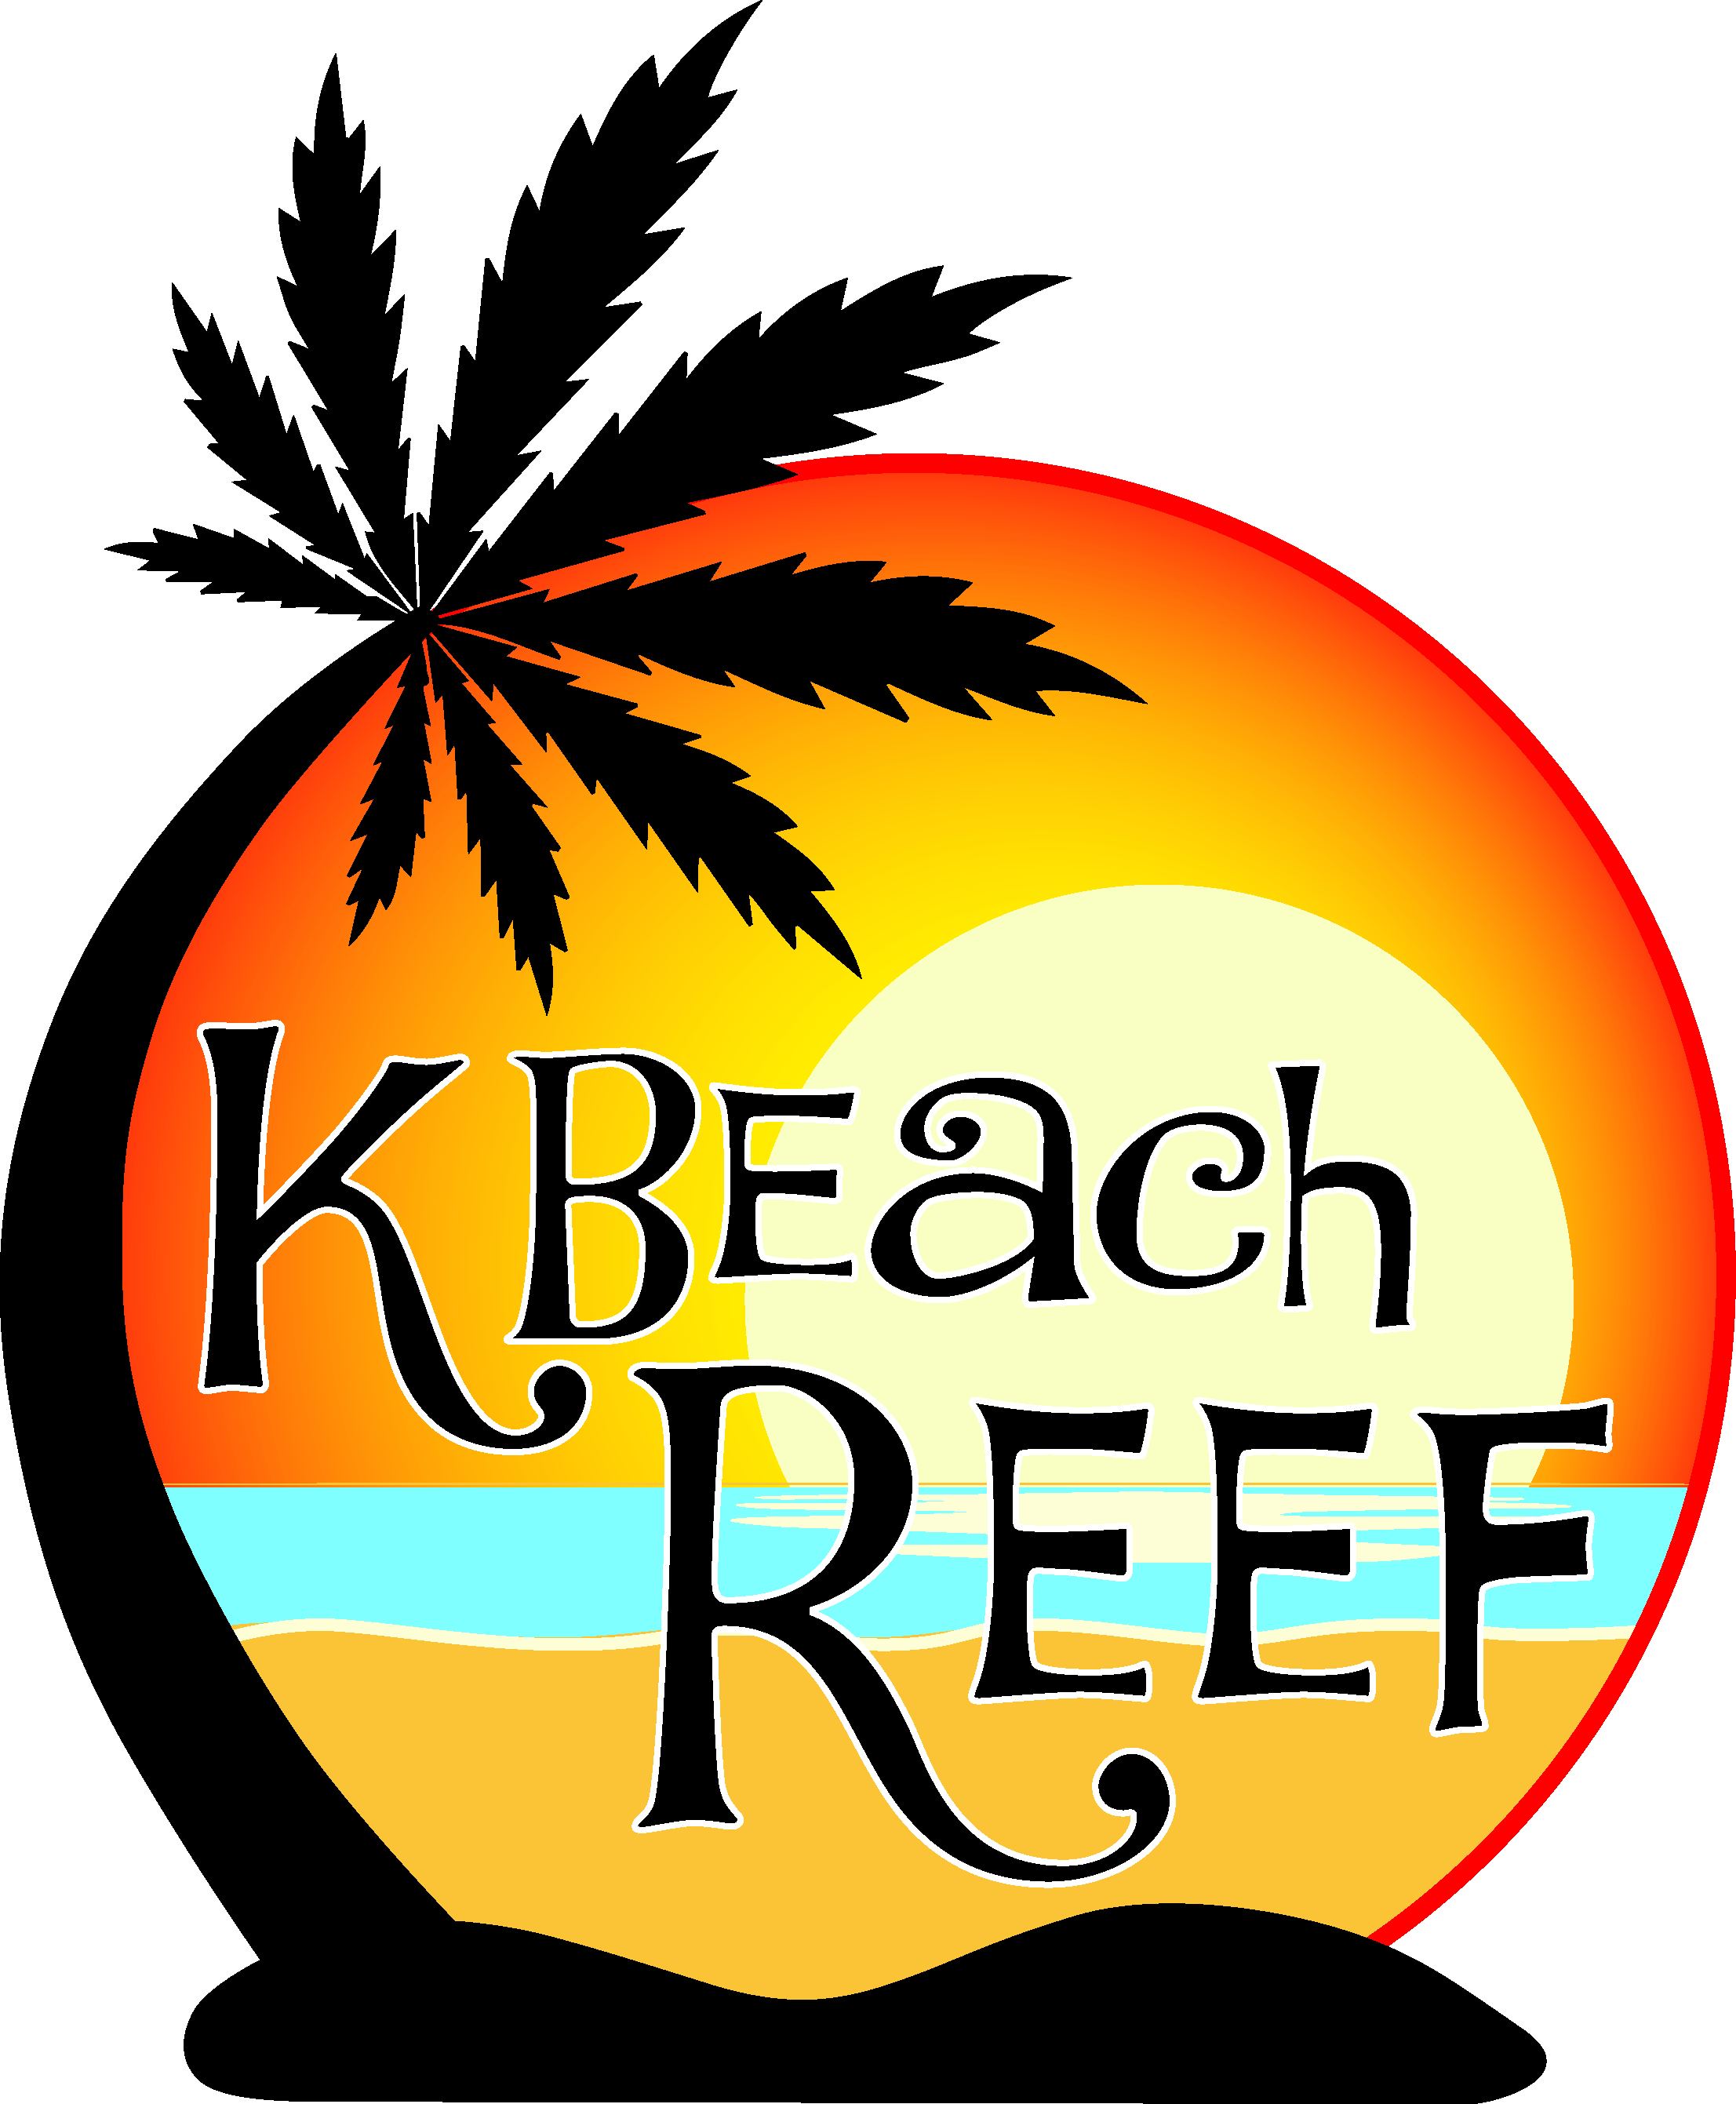 K Beach Reef - Medical Marijuana Doctors - Cannabizme.com